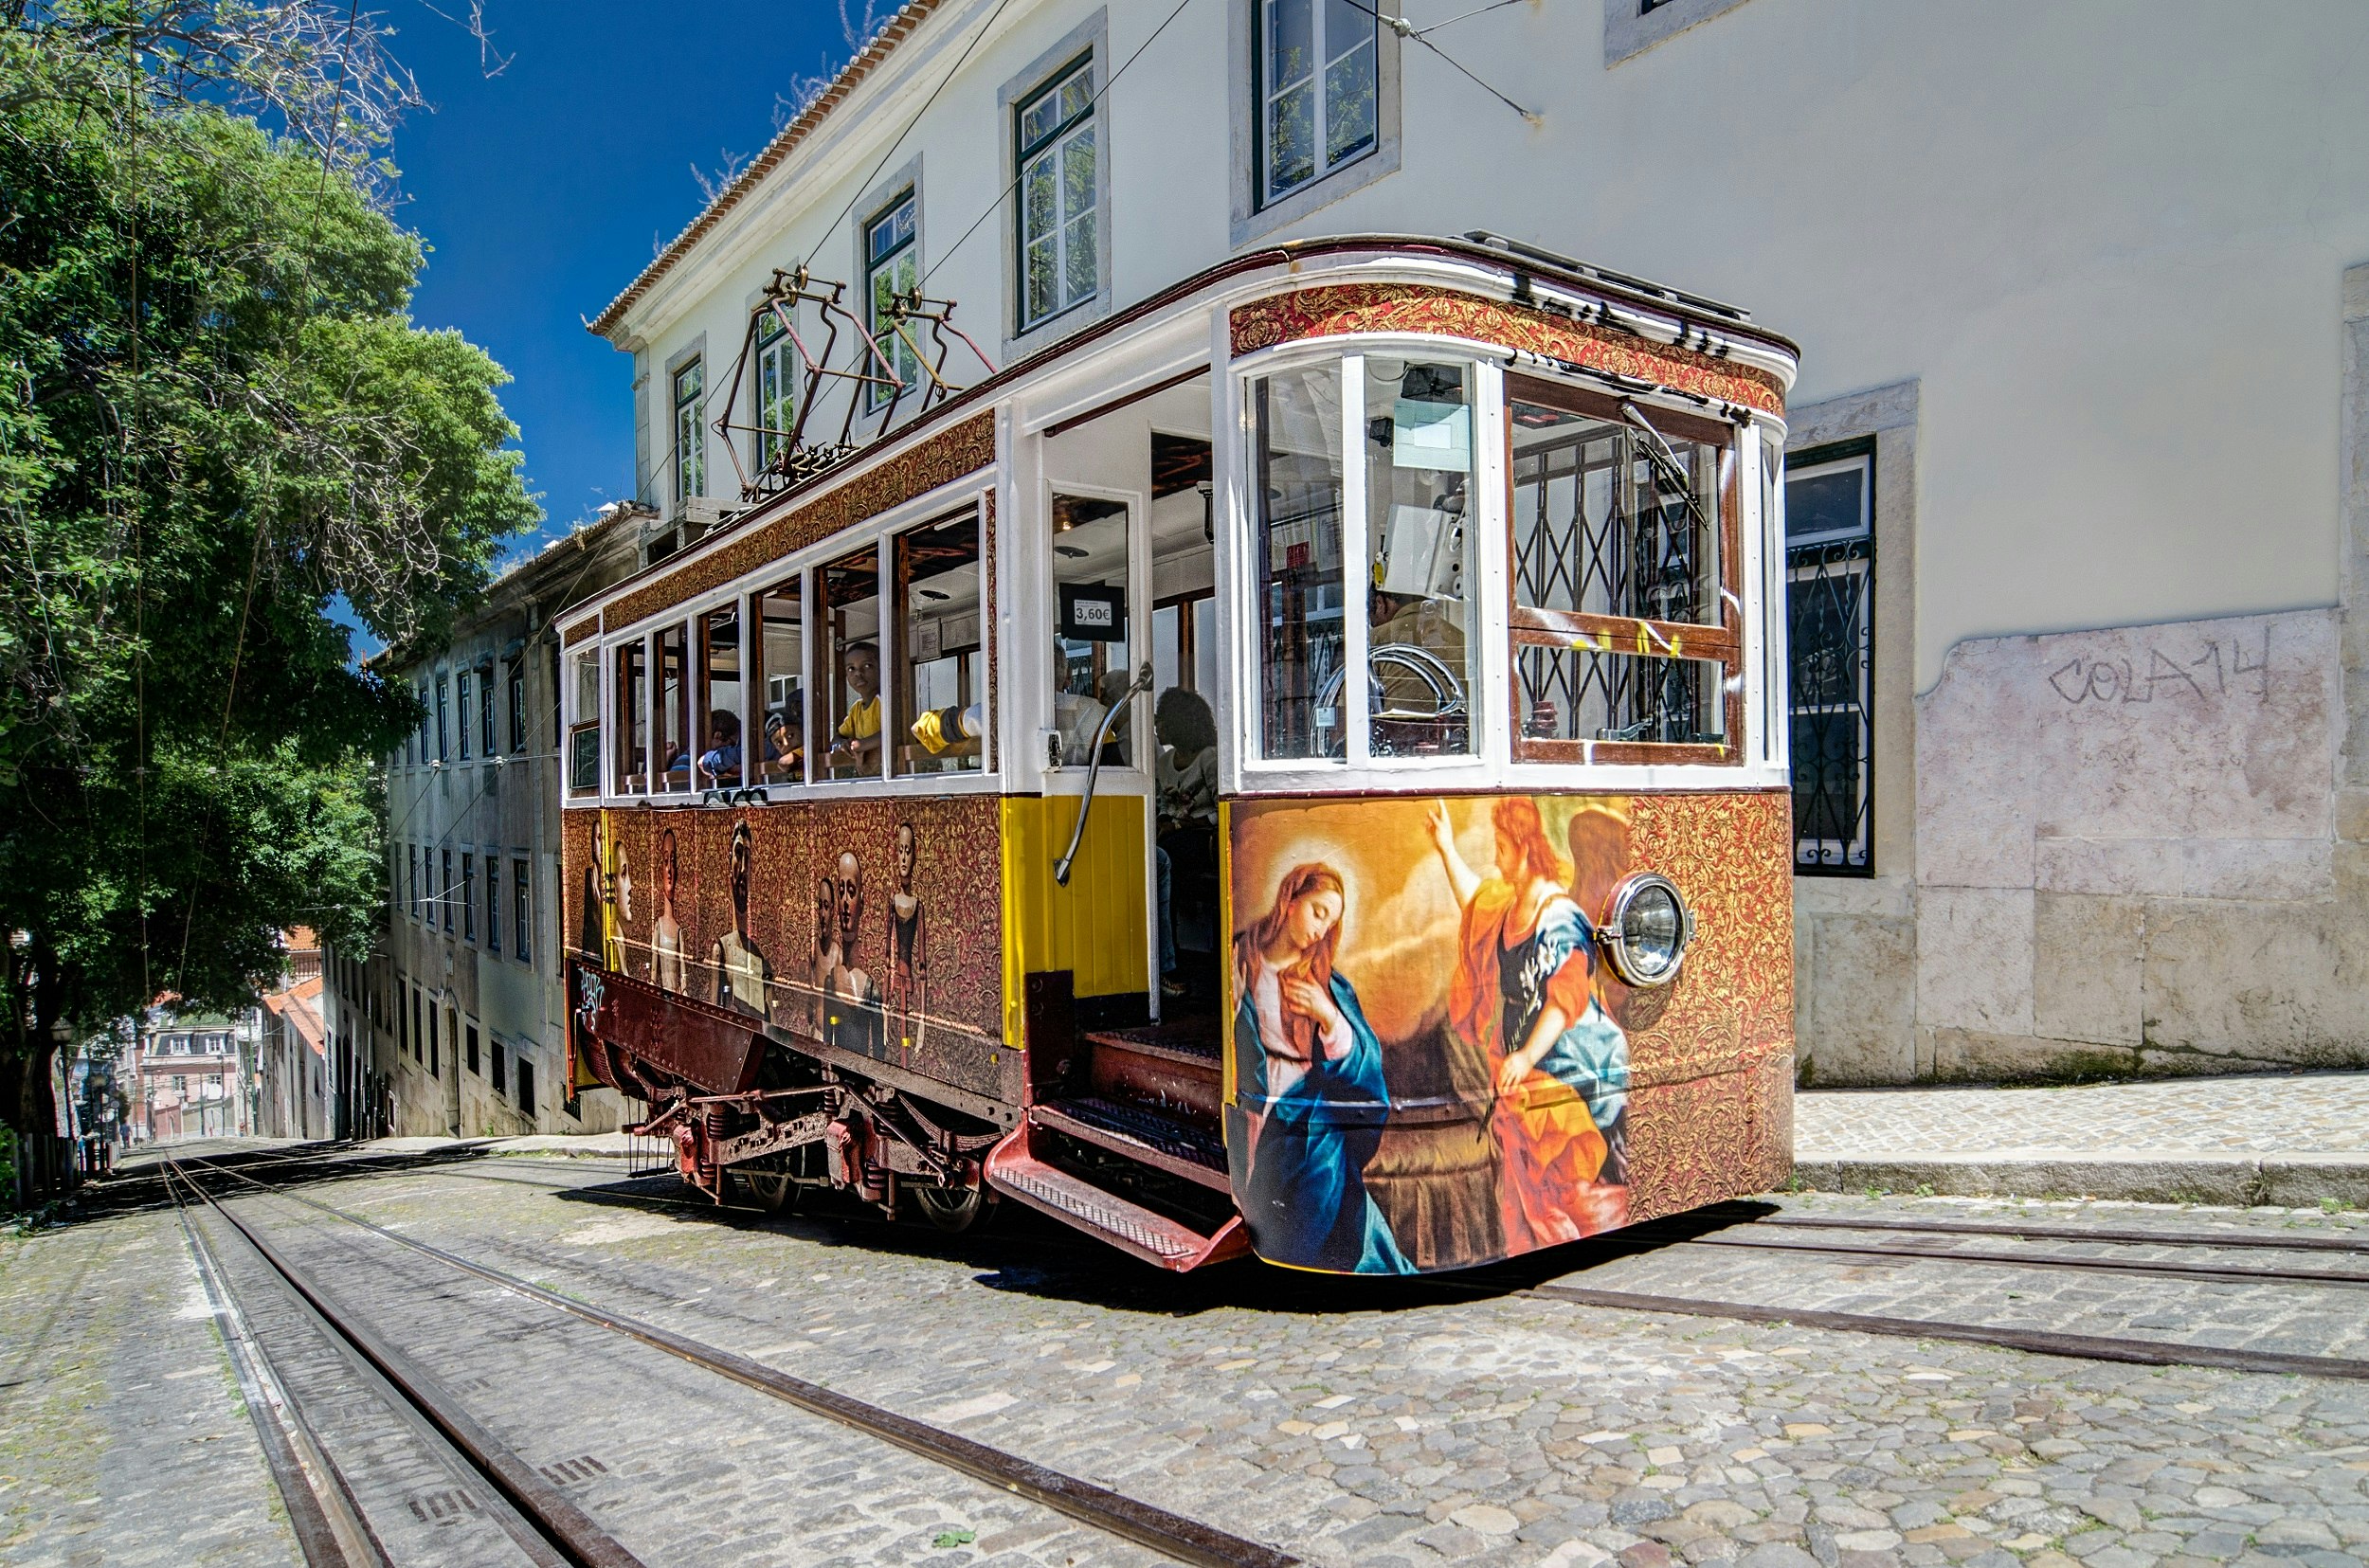 Ascensor da Glória on the street of Lisbon, Portugal